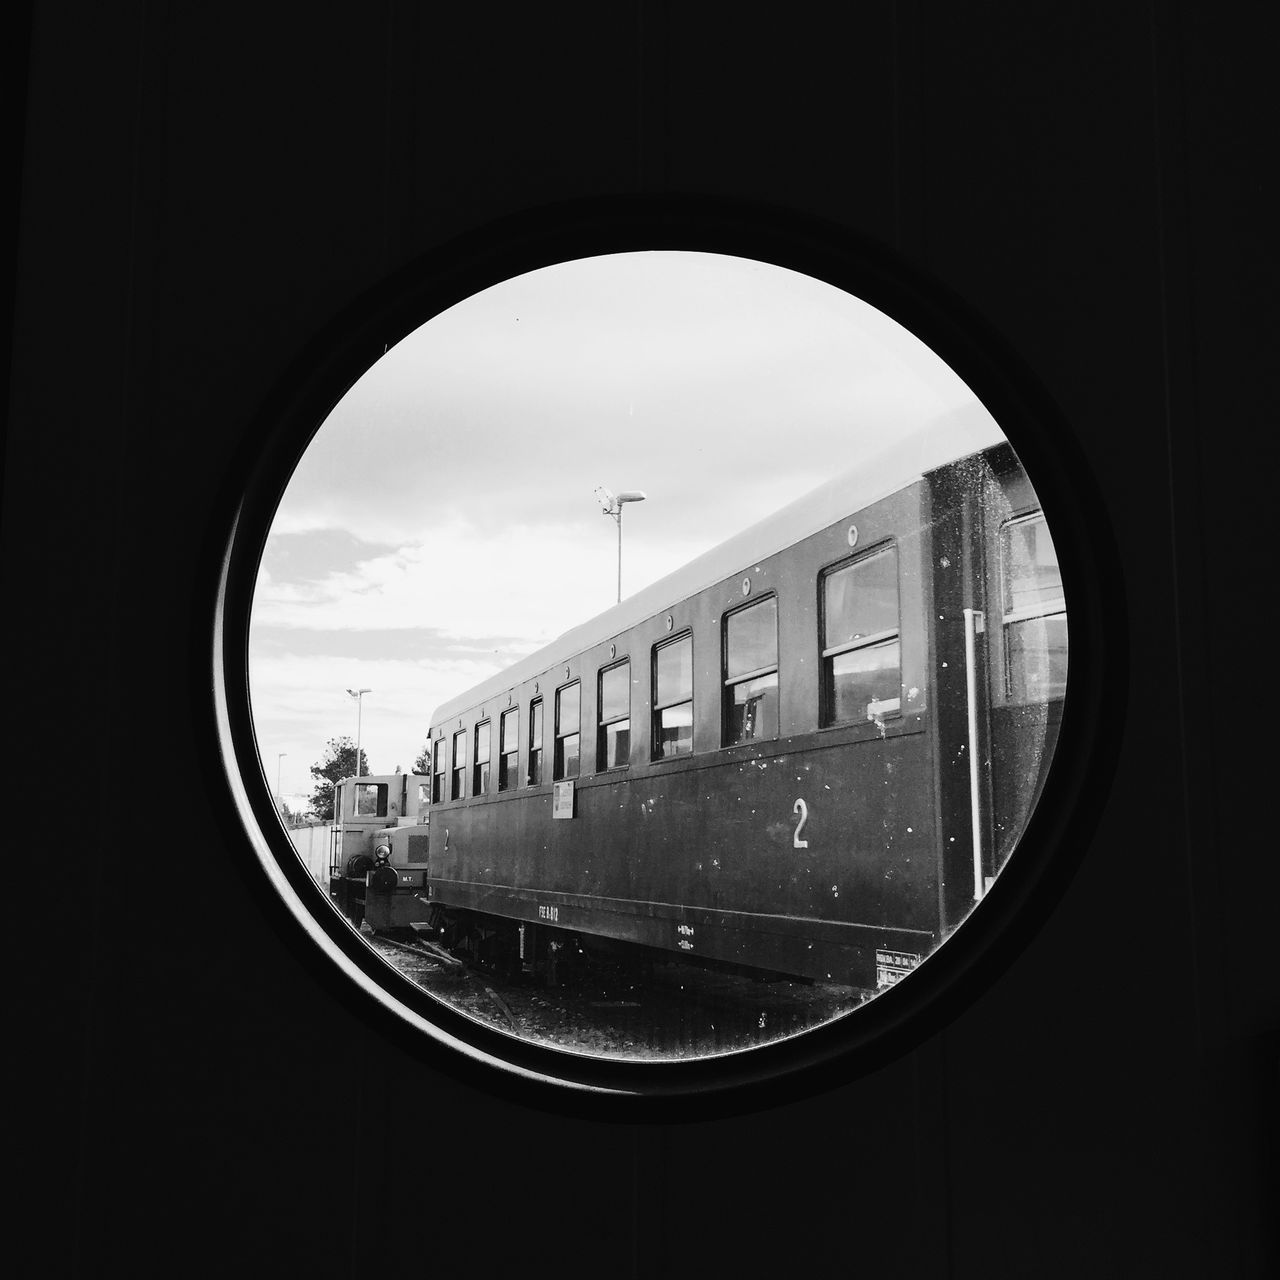 View of train through circular window